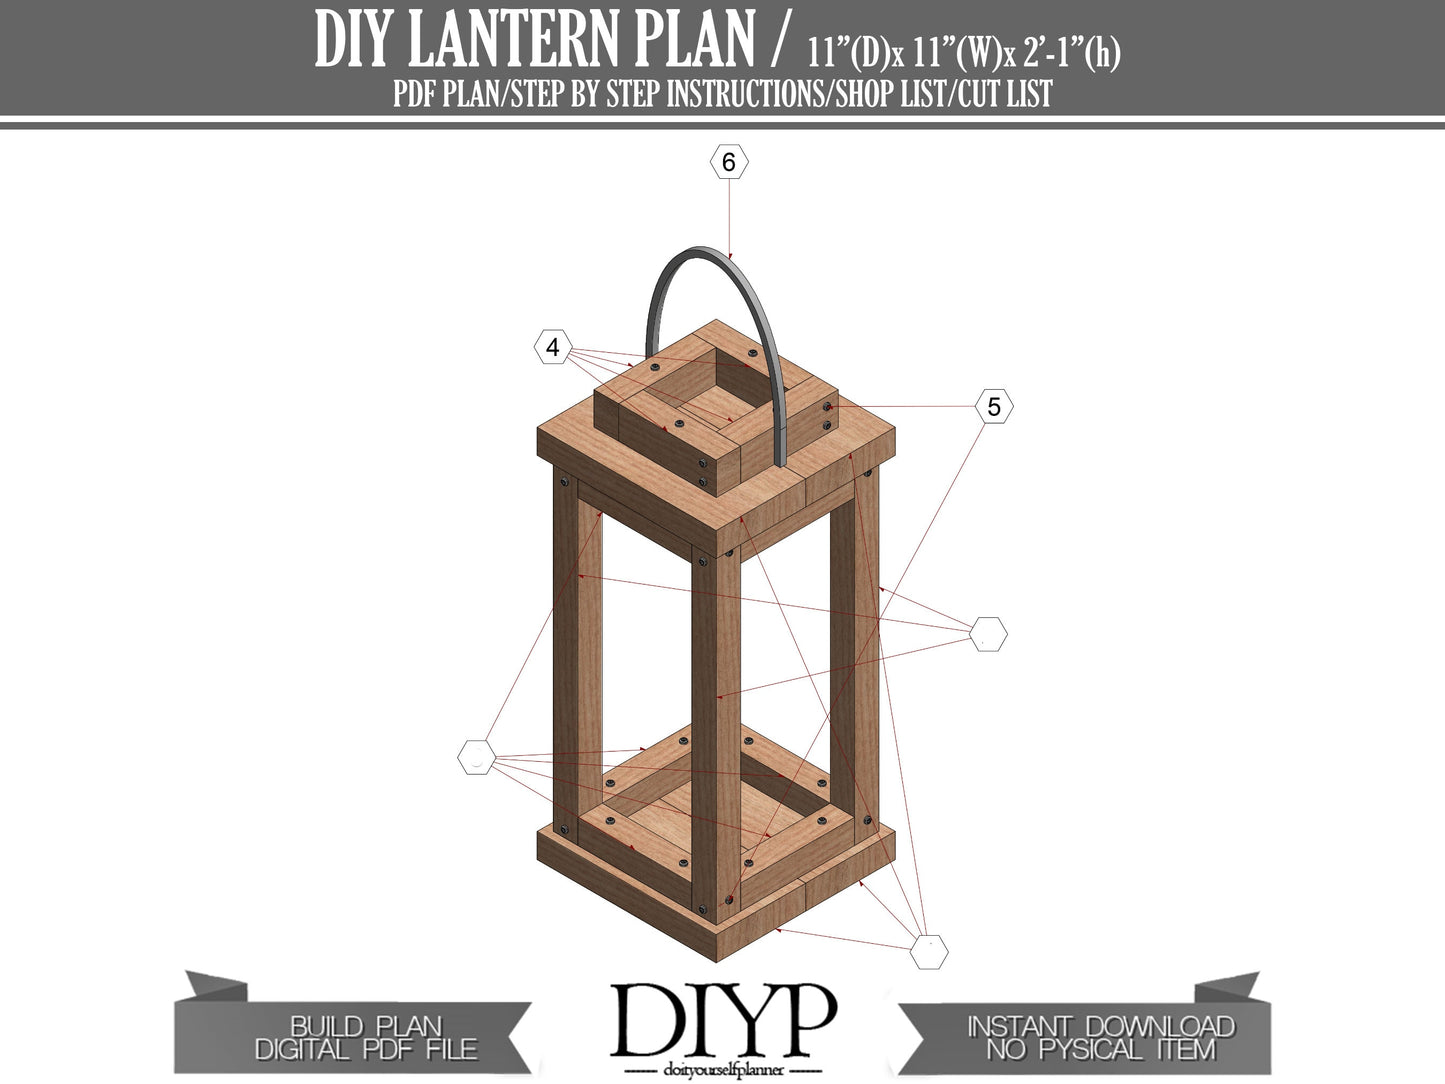 Diy plans for Farmhouse wooden floor lantern - Wooden Lantern for Wedding Table Decoration - Wooden lampion